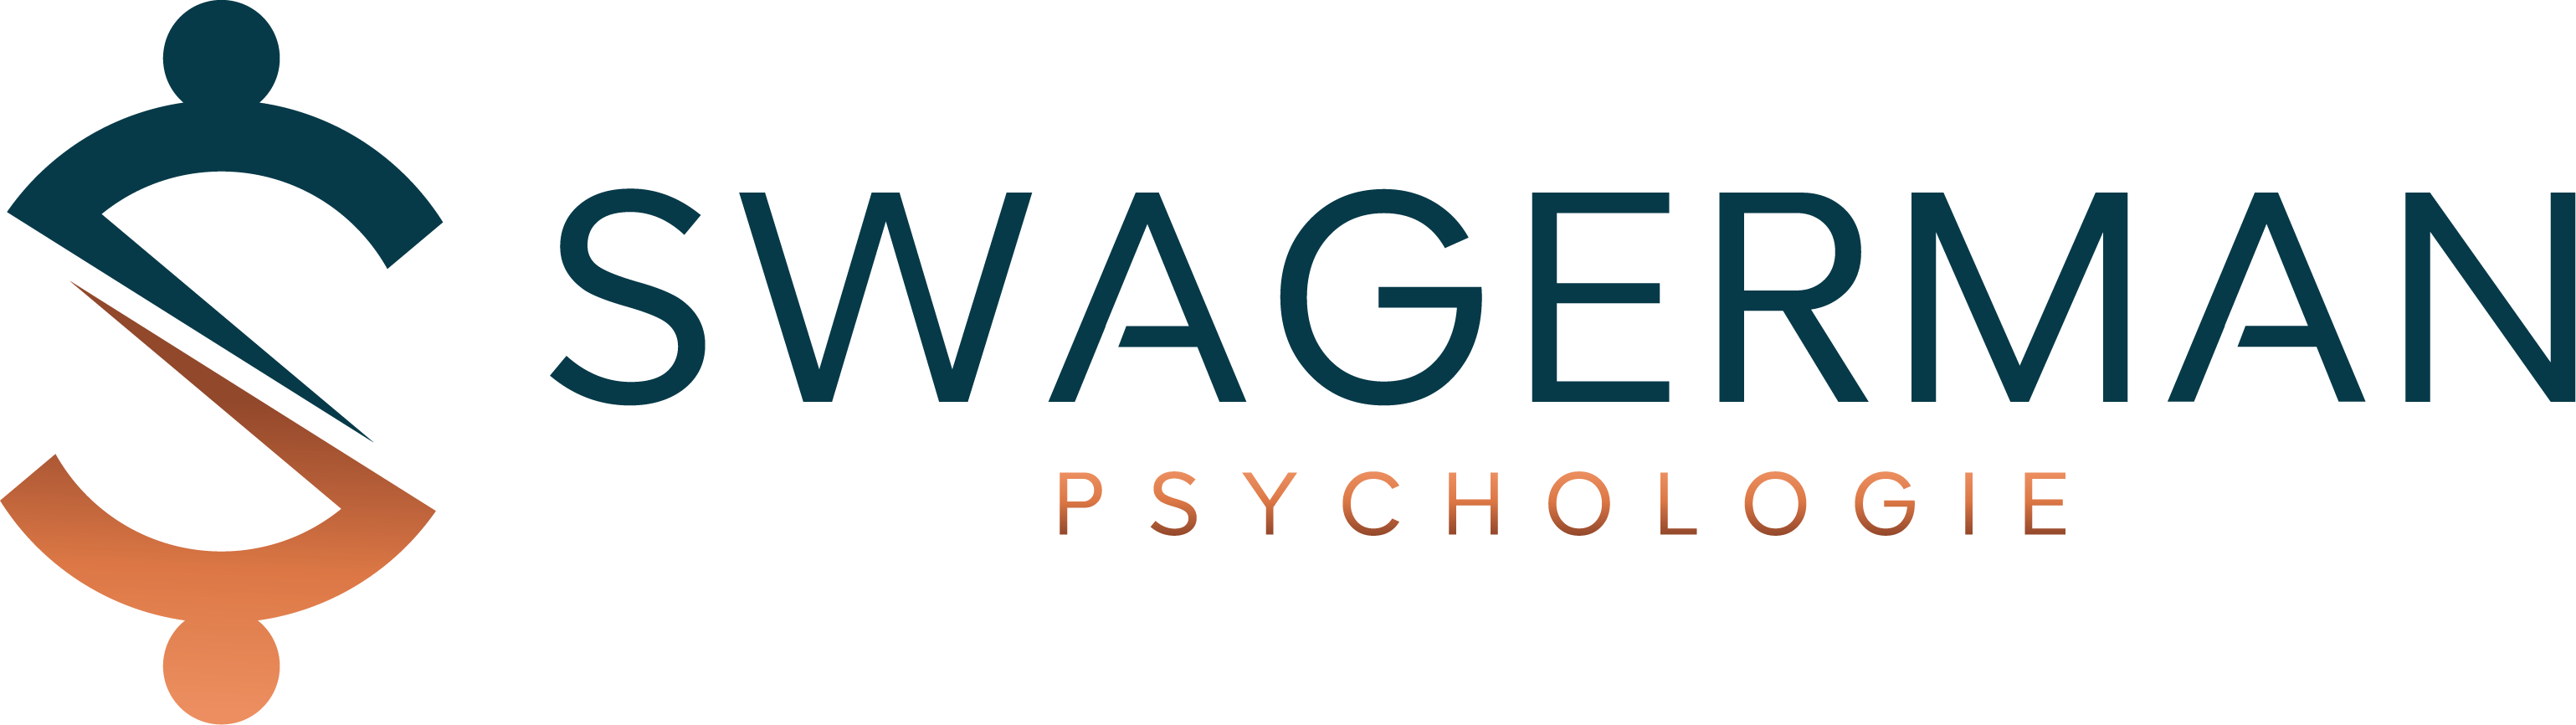 Swagerman Psychologie